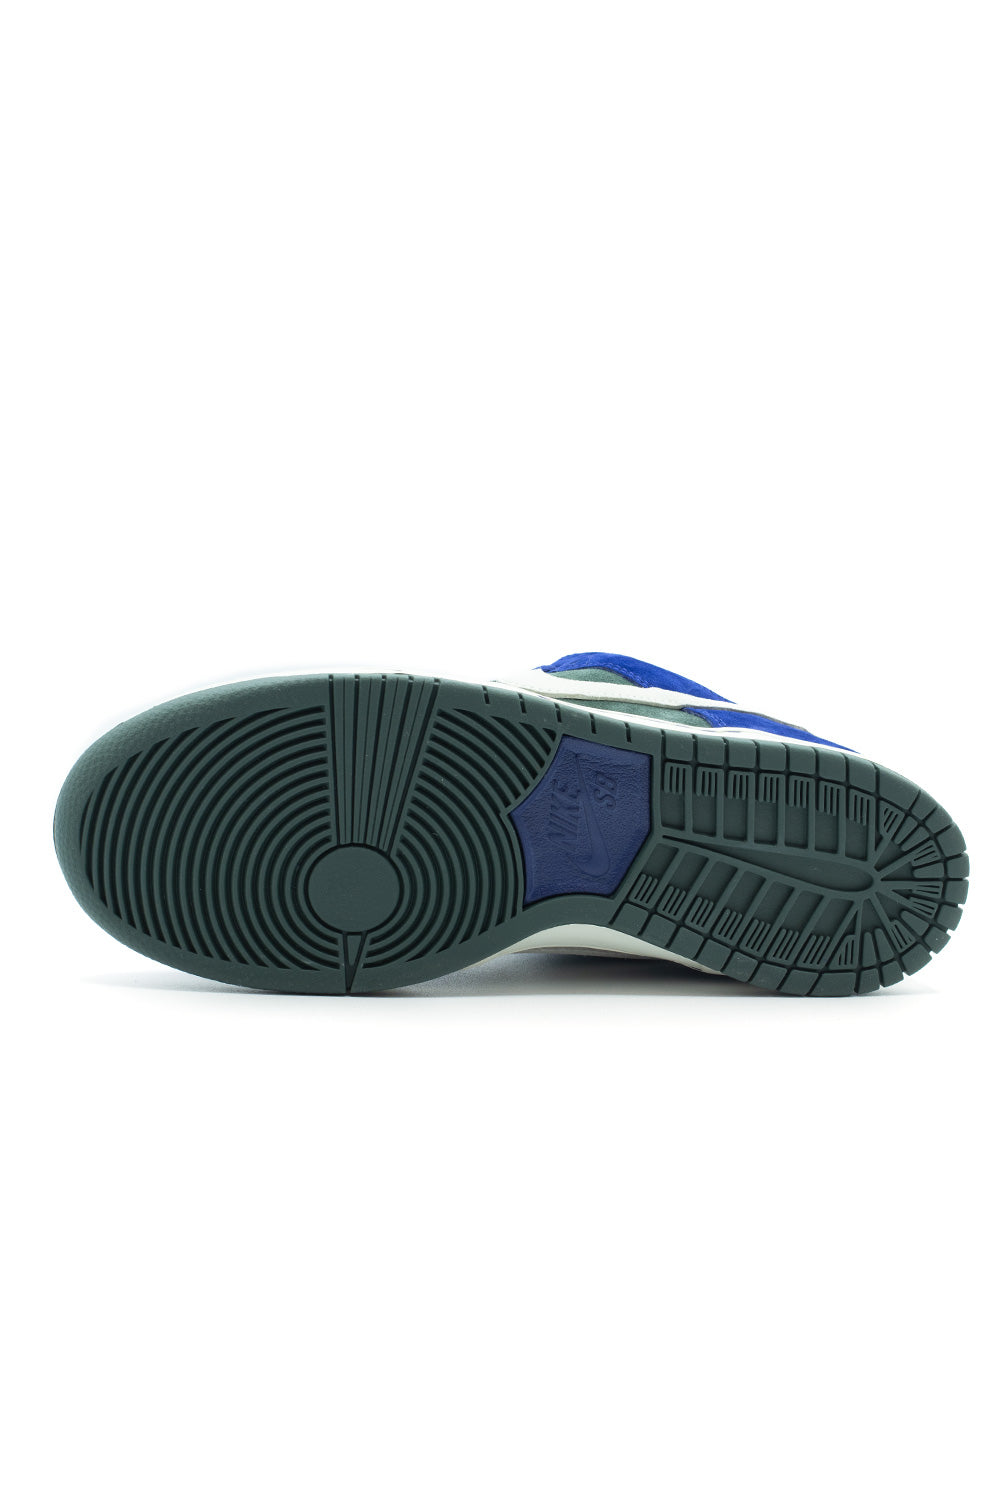 Nike SB Dunk Low Pro Shoe (Wildcard) Deep Royal Blue / Sail - BONKERS